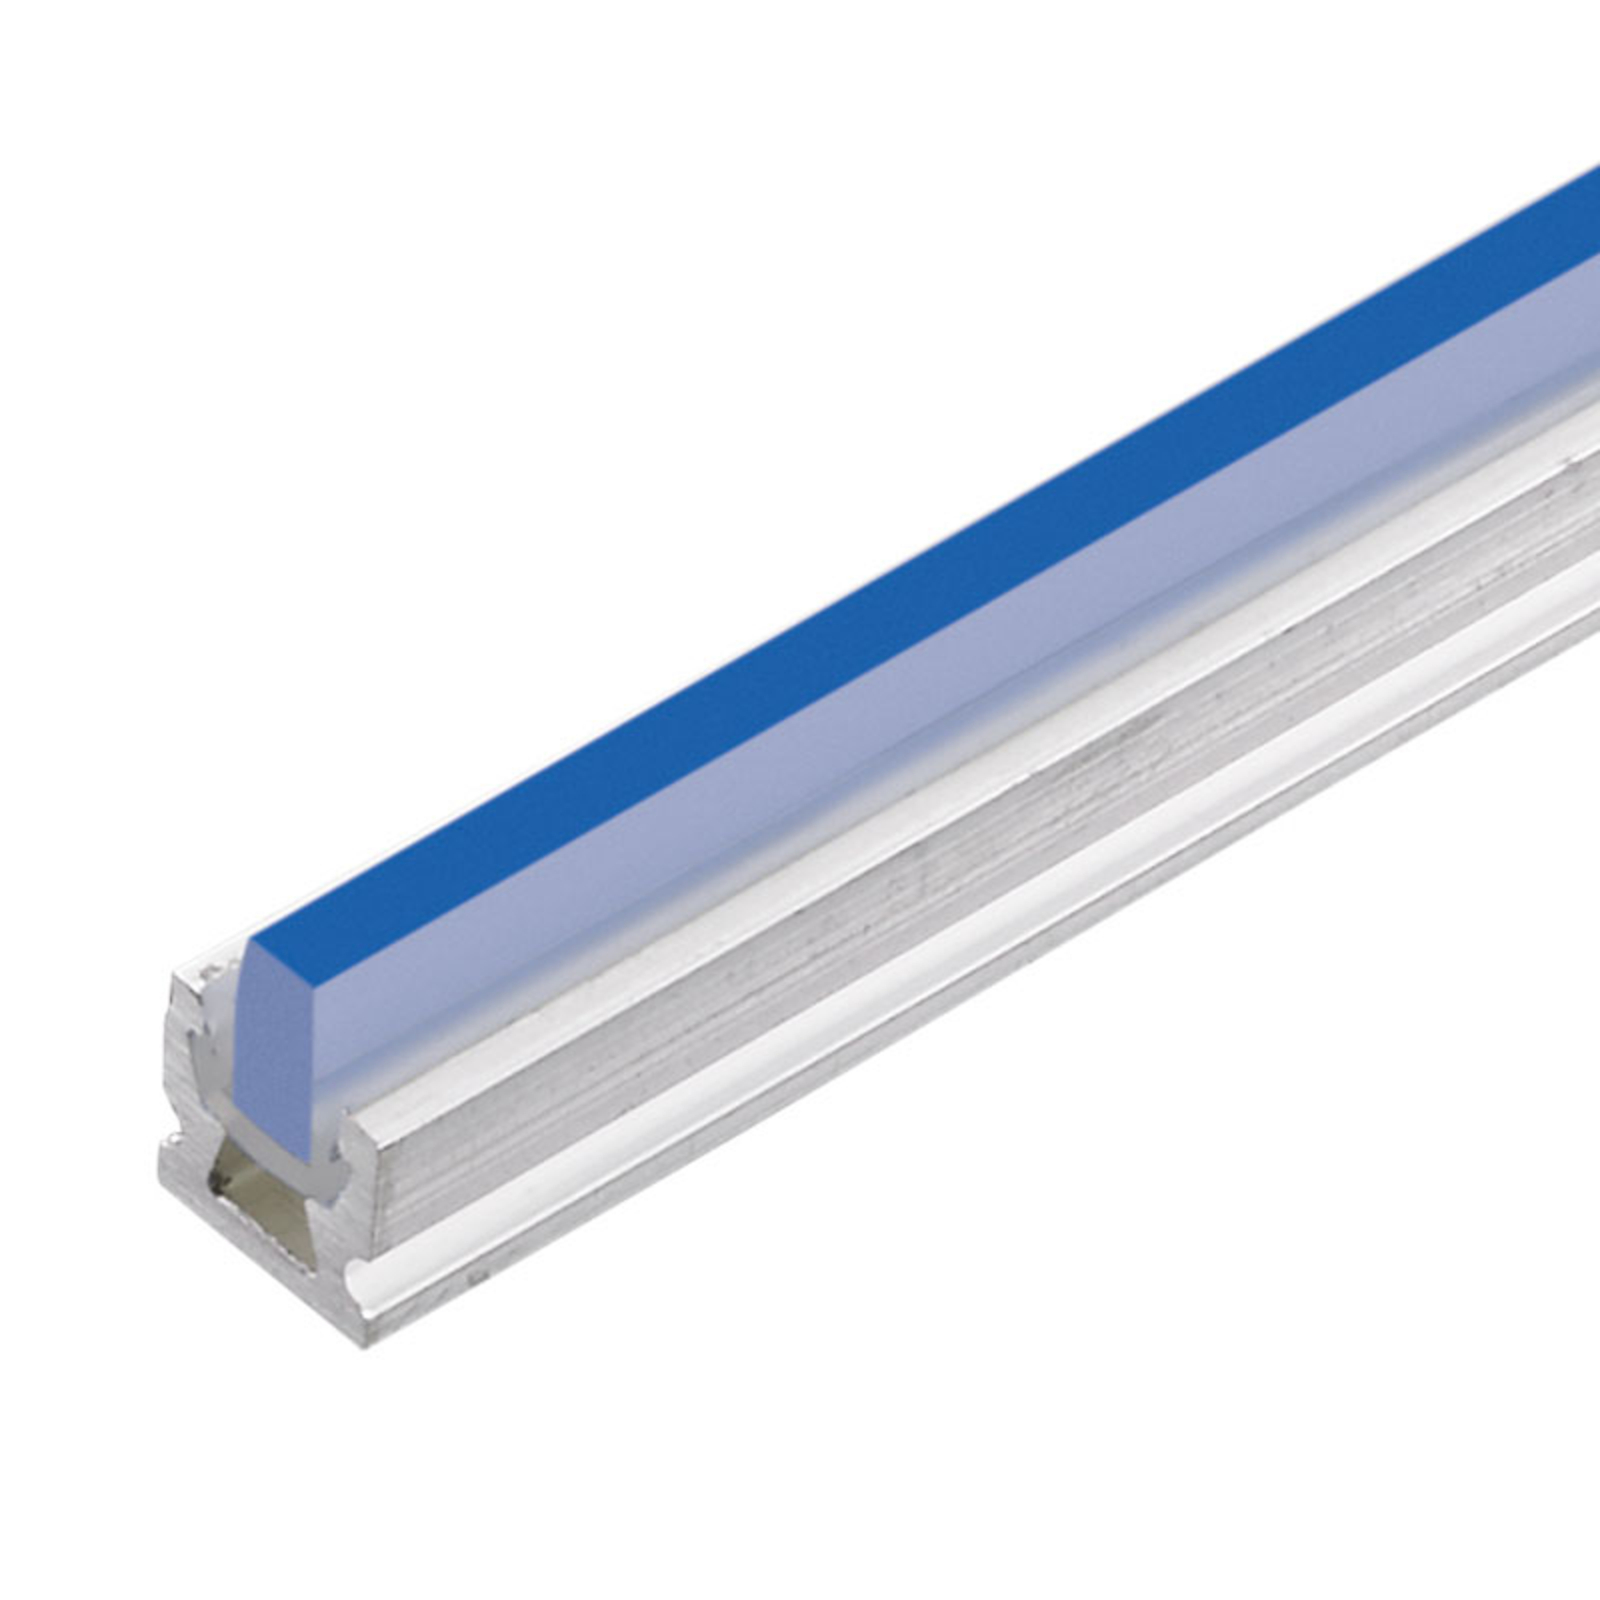 sada bodových světelných LED čar sl 3,5, modrá, 30 cm